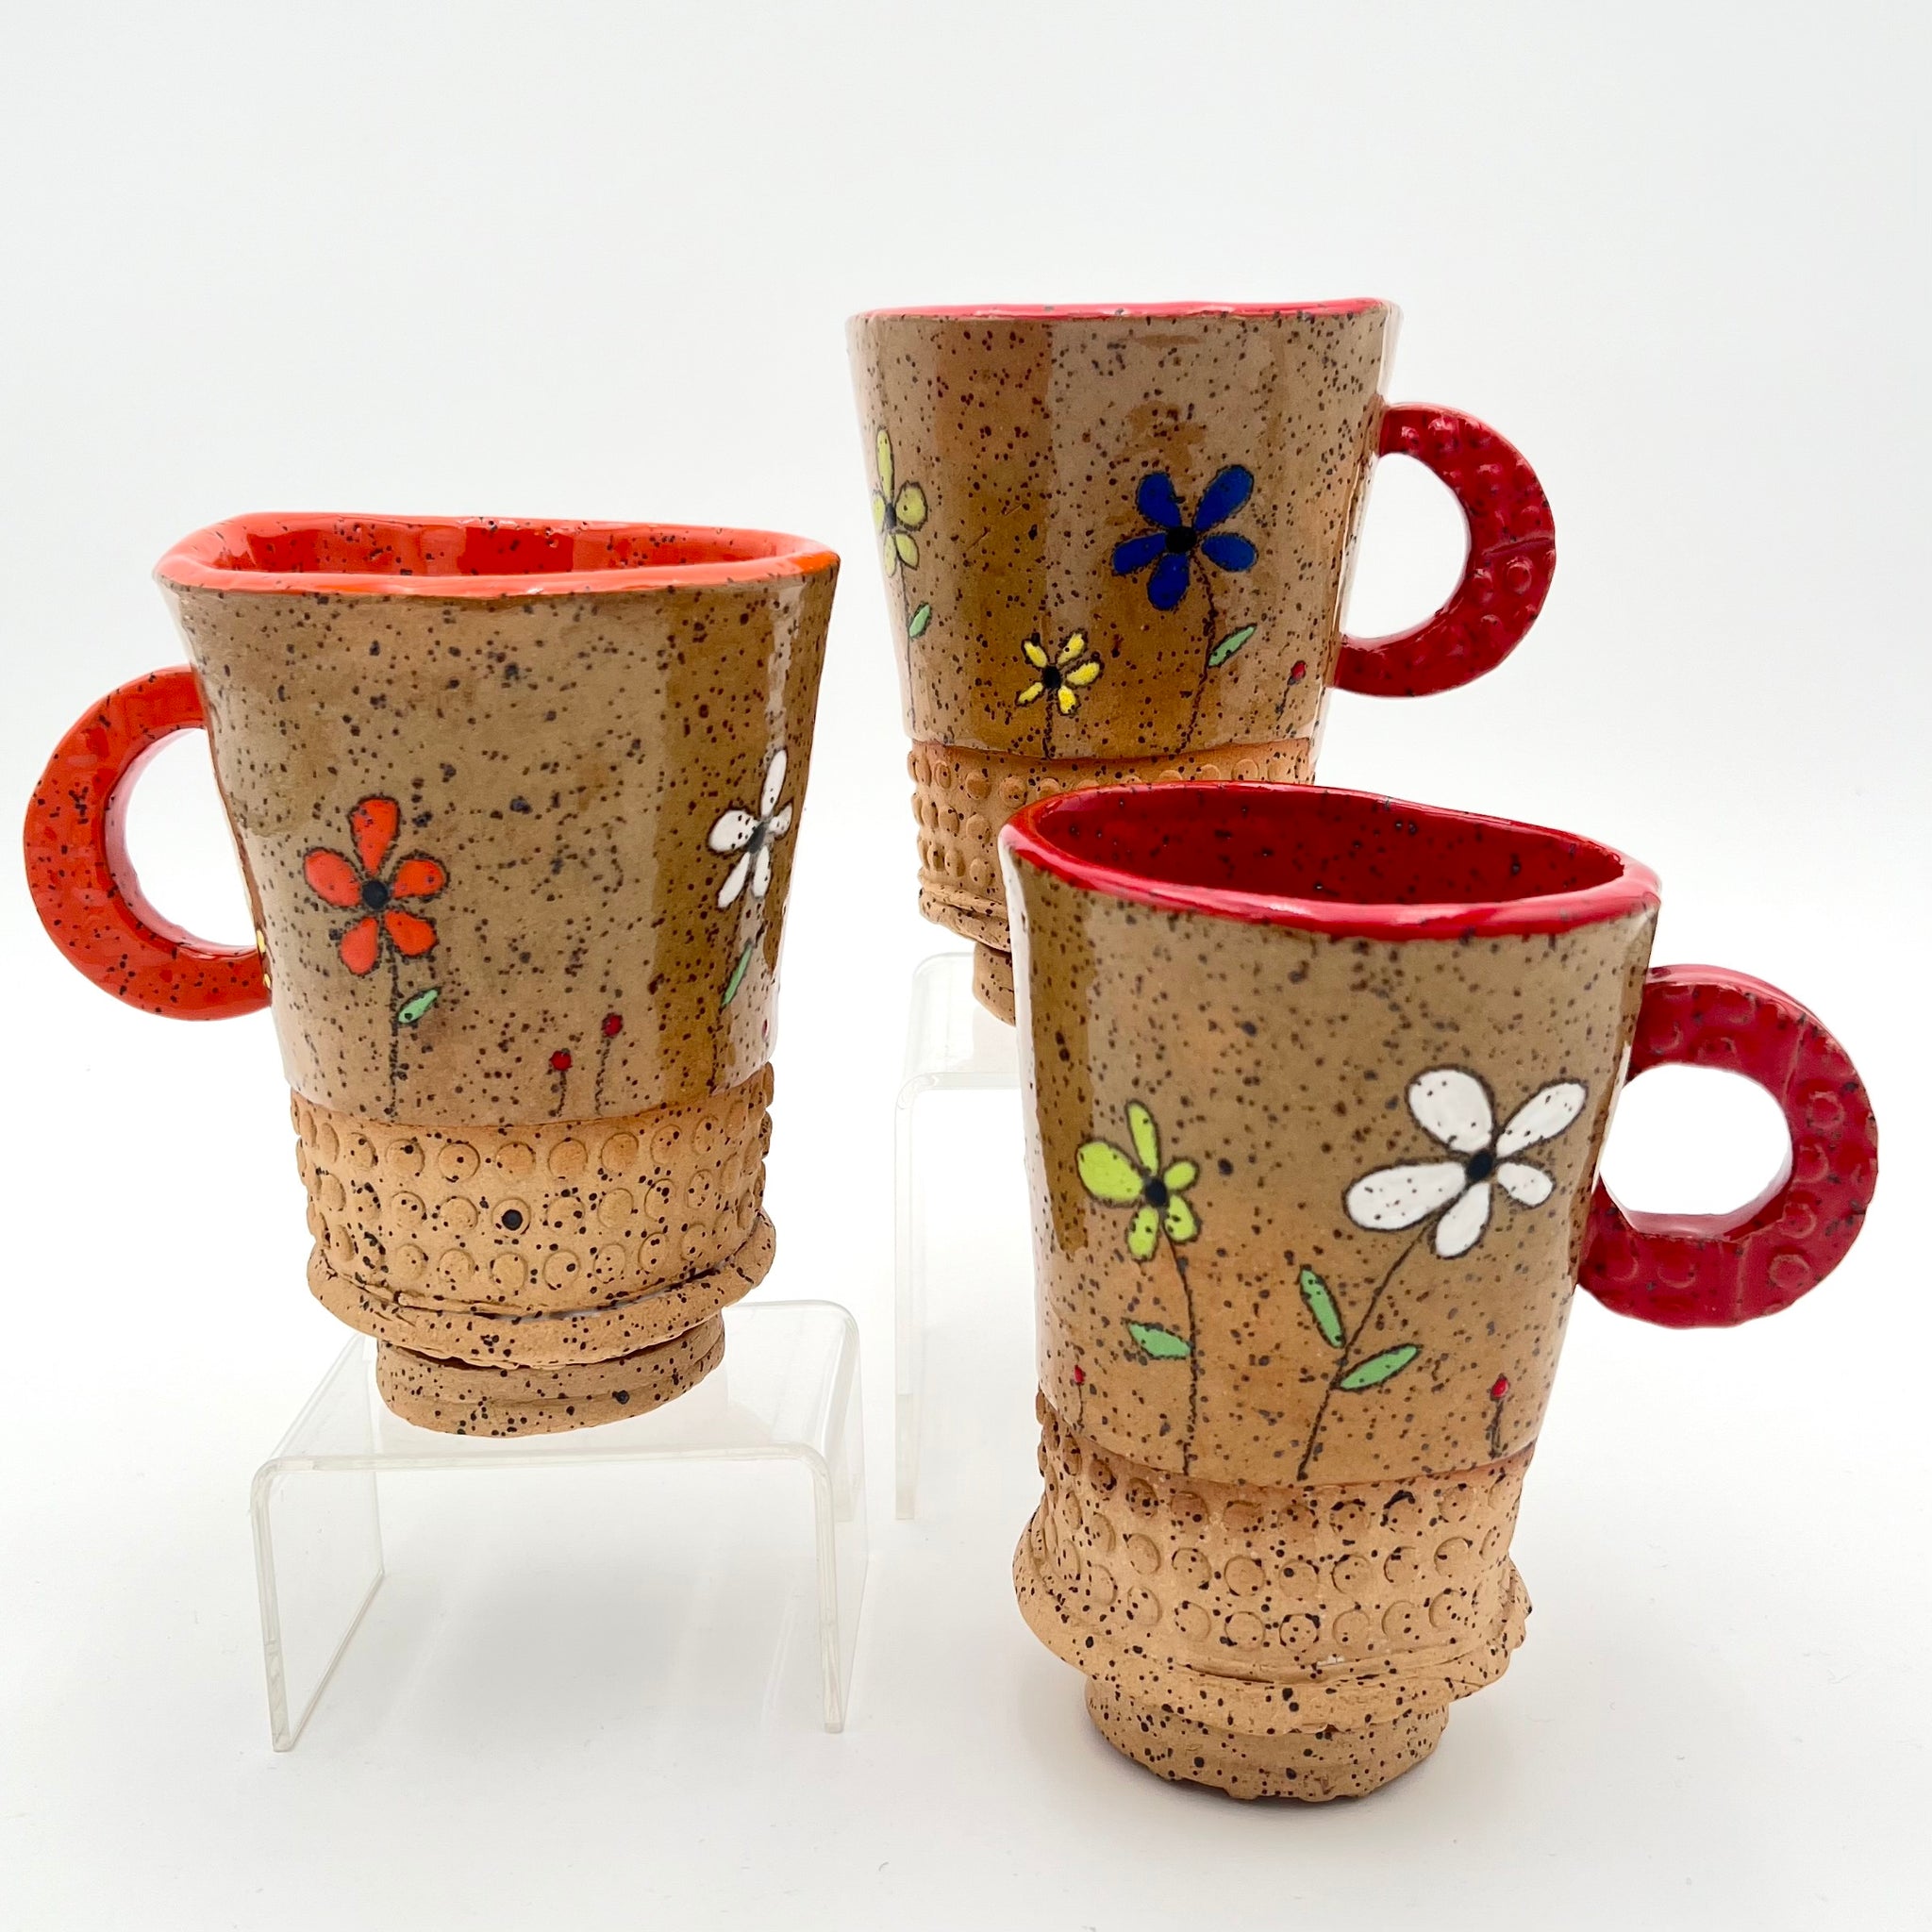 Sundell - Large Handled Mug - Textured Bottom with Flowers (Peppered Wheat)